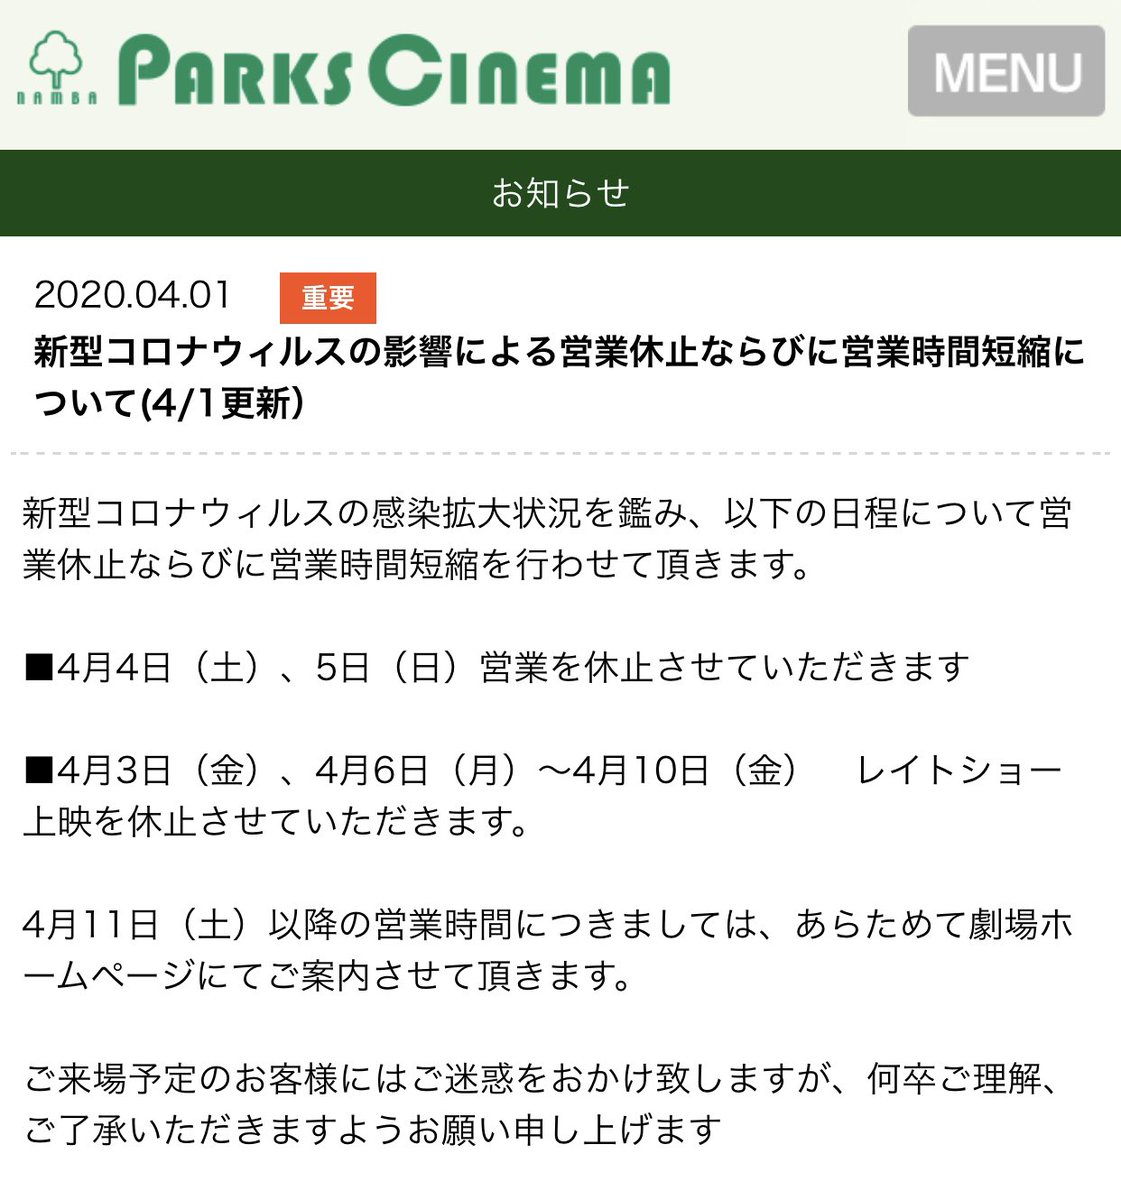 Papiko 追加 4 4 土 4 5 日 休館の映画館 梅田ブルク7 109シネマズ大阪エキスポシティ